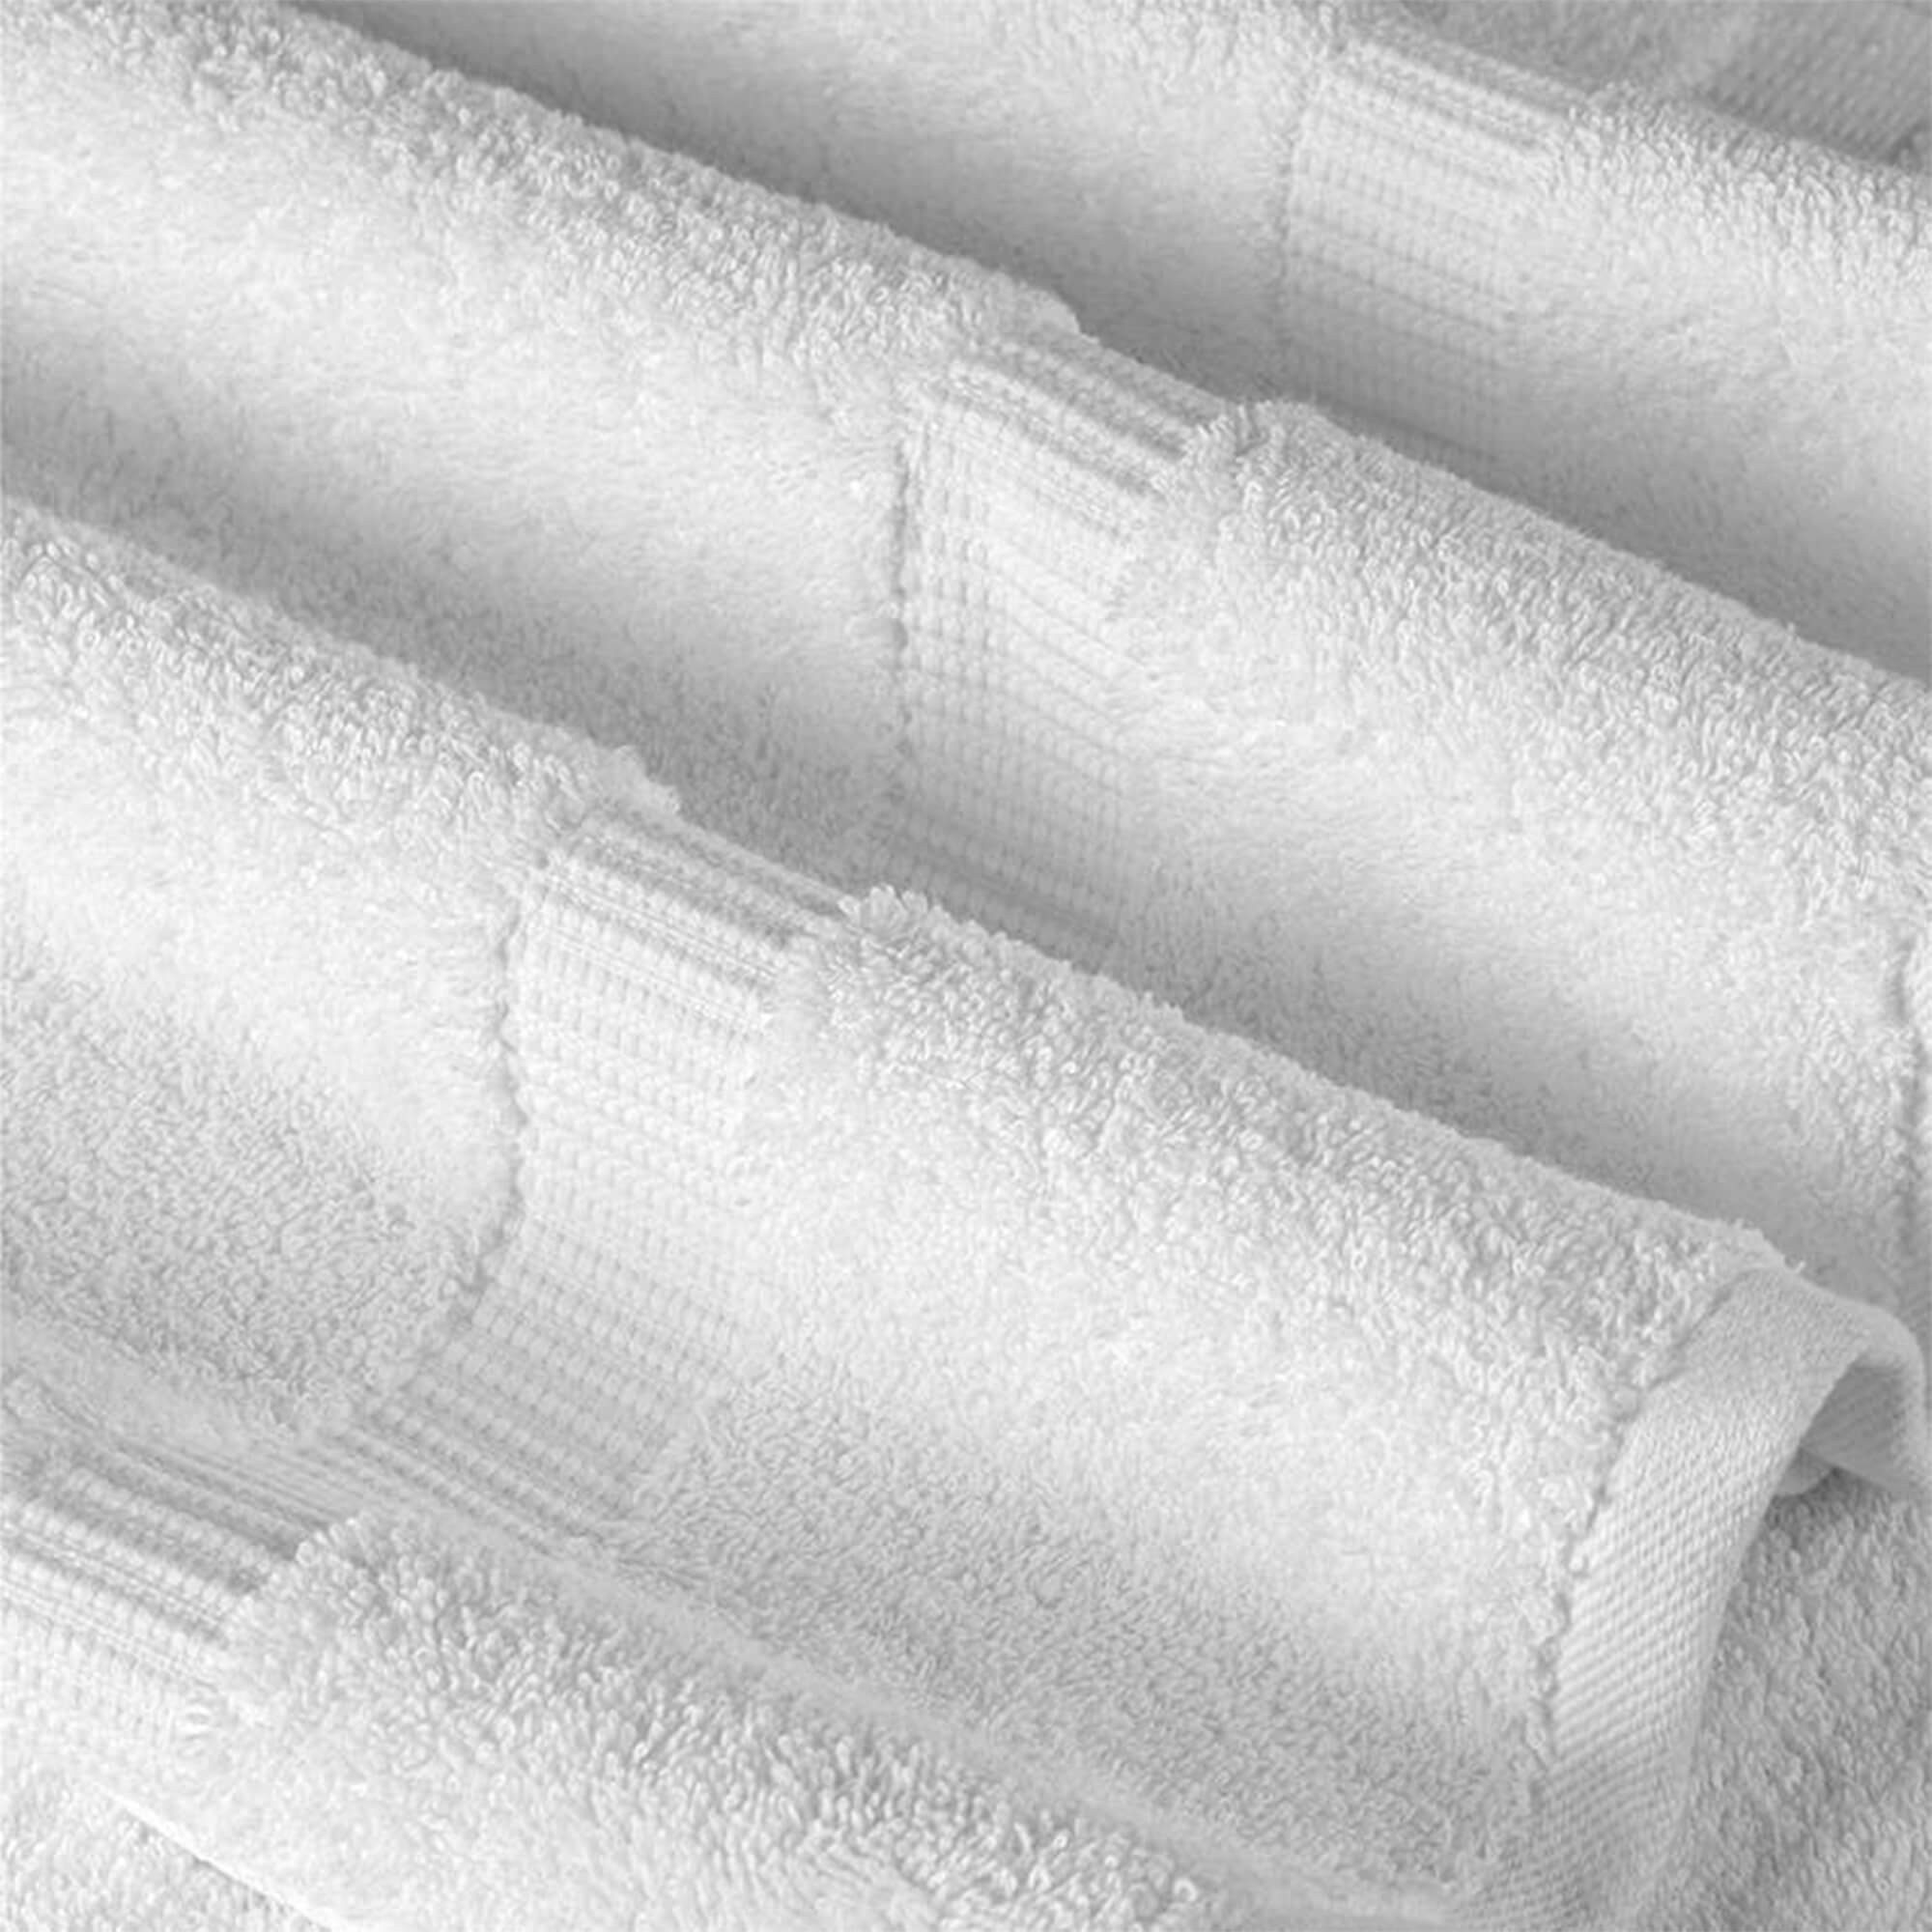  Luxury White Bath Towel Set - Combed Cotton Hotel